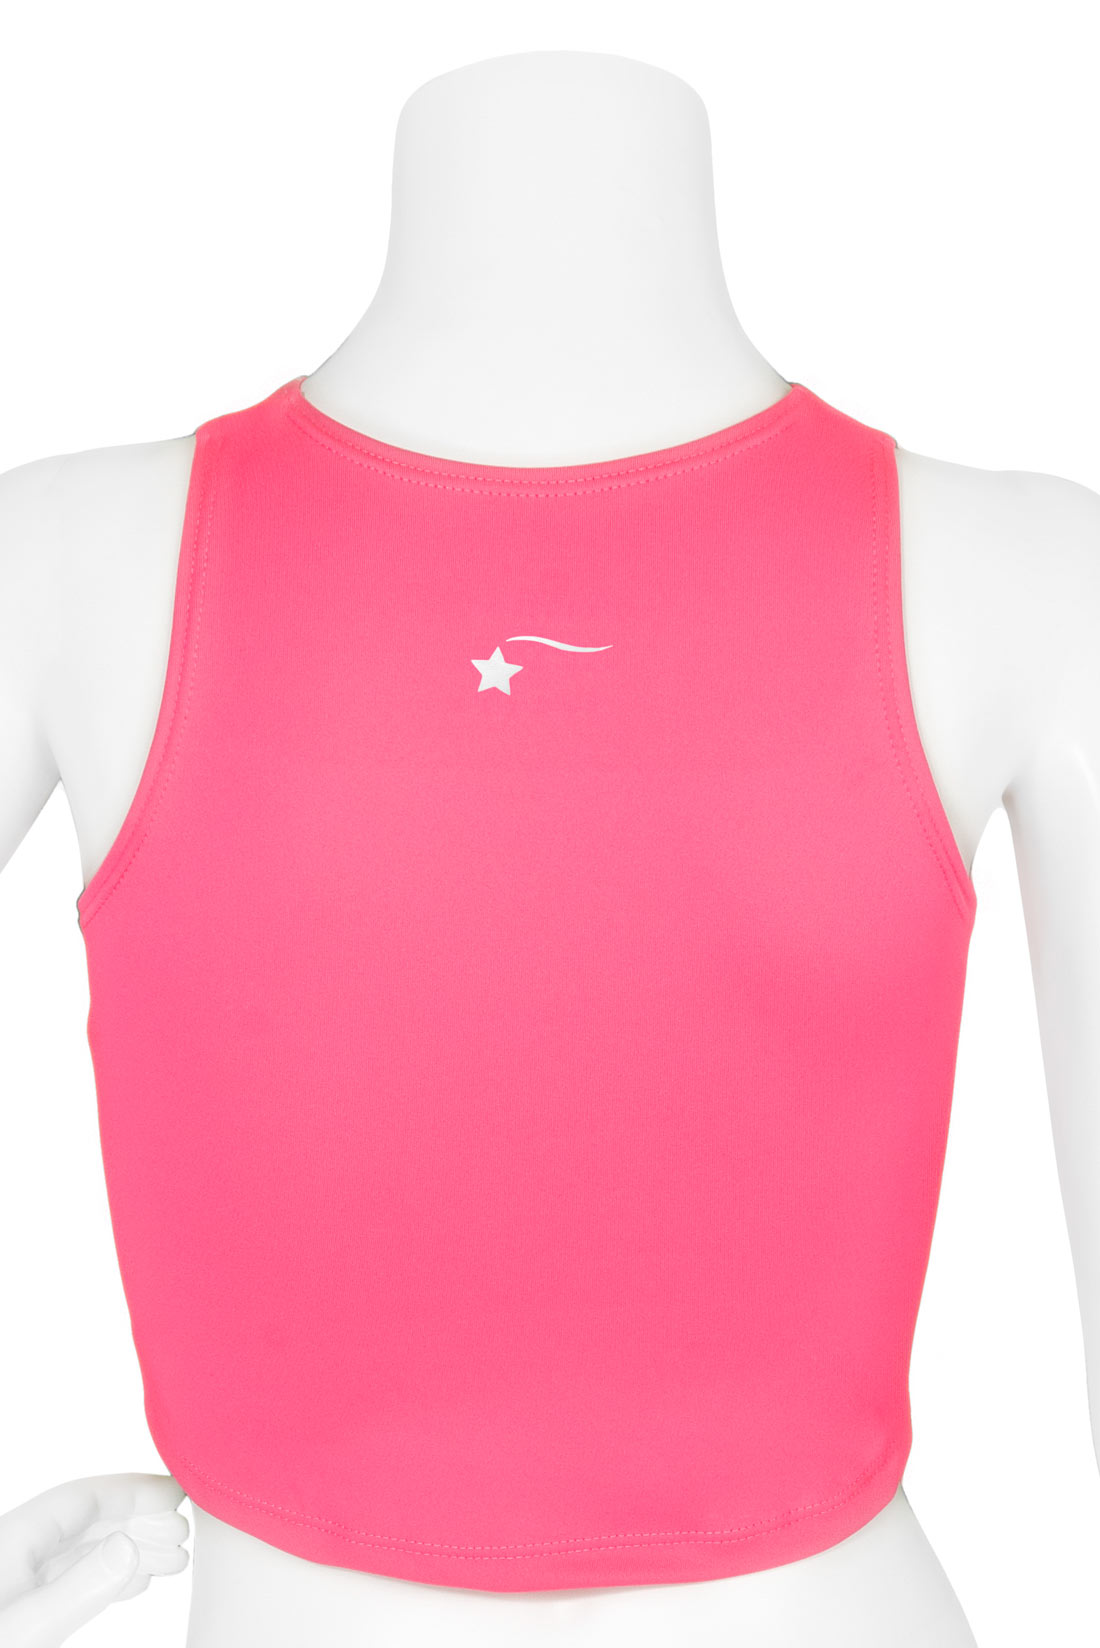 Sleeveless pink sport tank for athletes by Destira, 2024